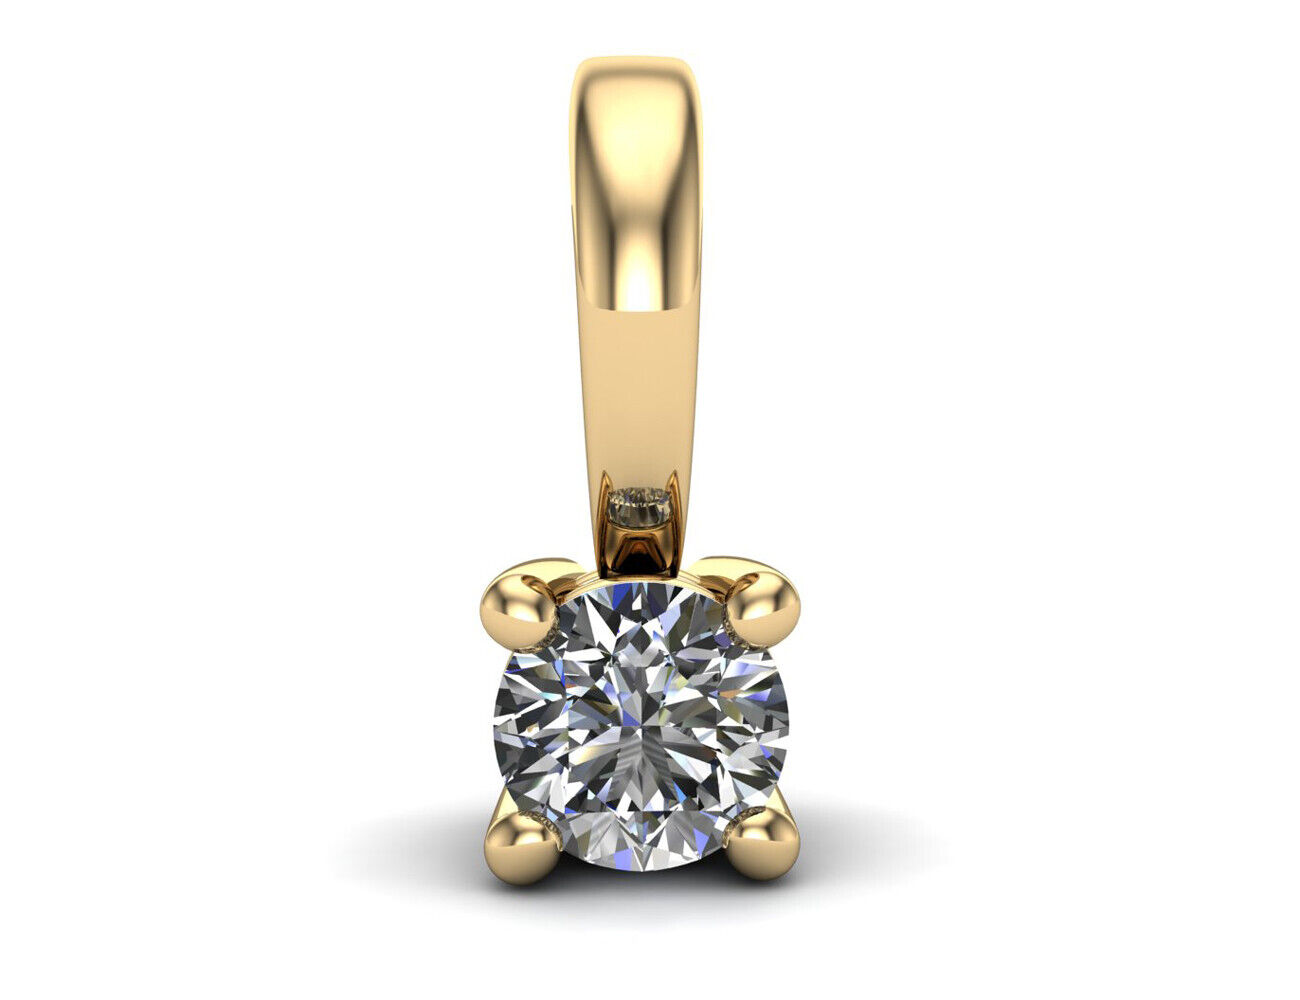 Diamant Solitär Anhänger 585/000 14 K Gelbgold 1 Brillant 0,07 ct